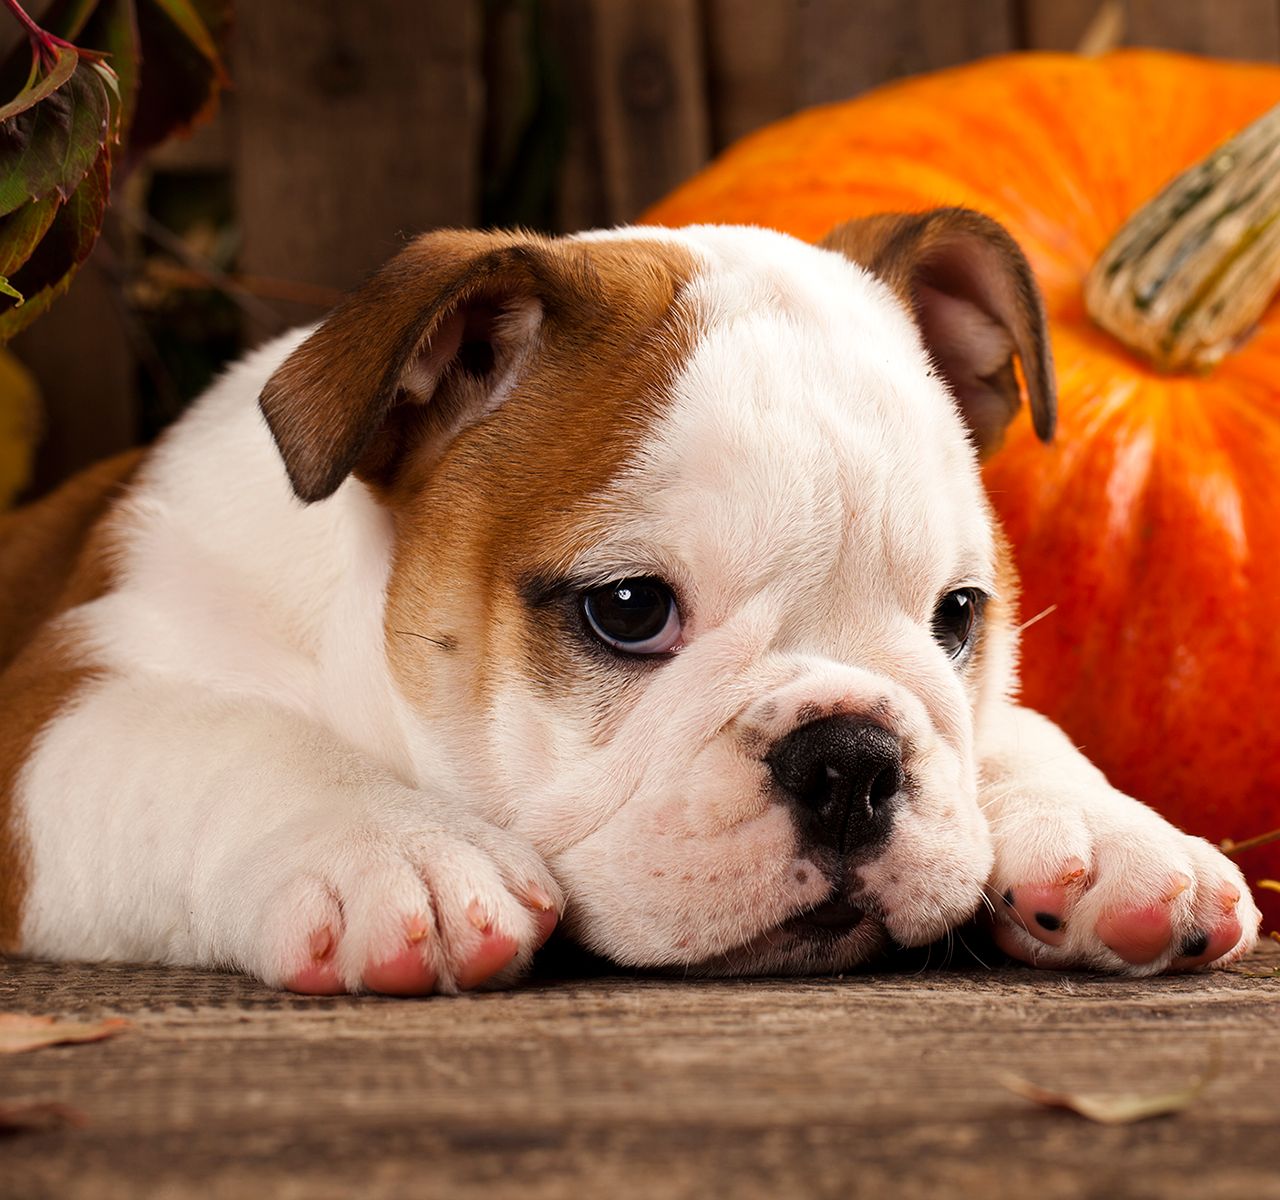 Teach Your Dog Some Halloween Tricks